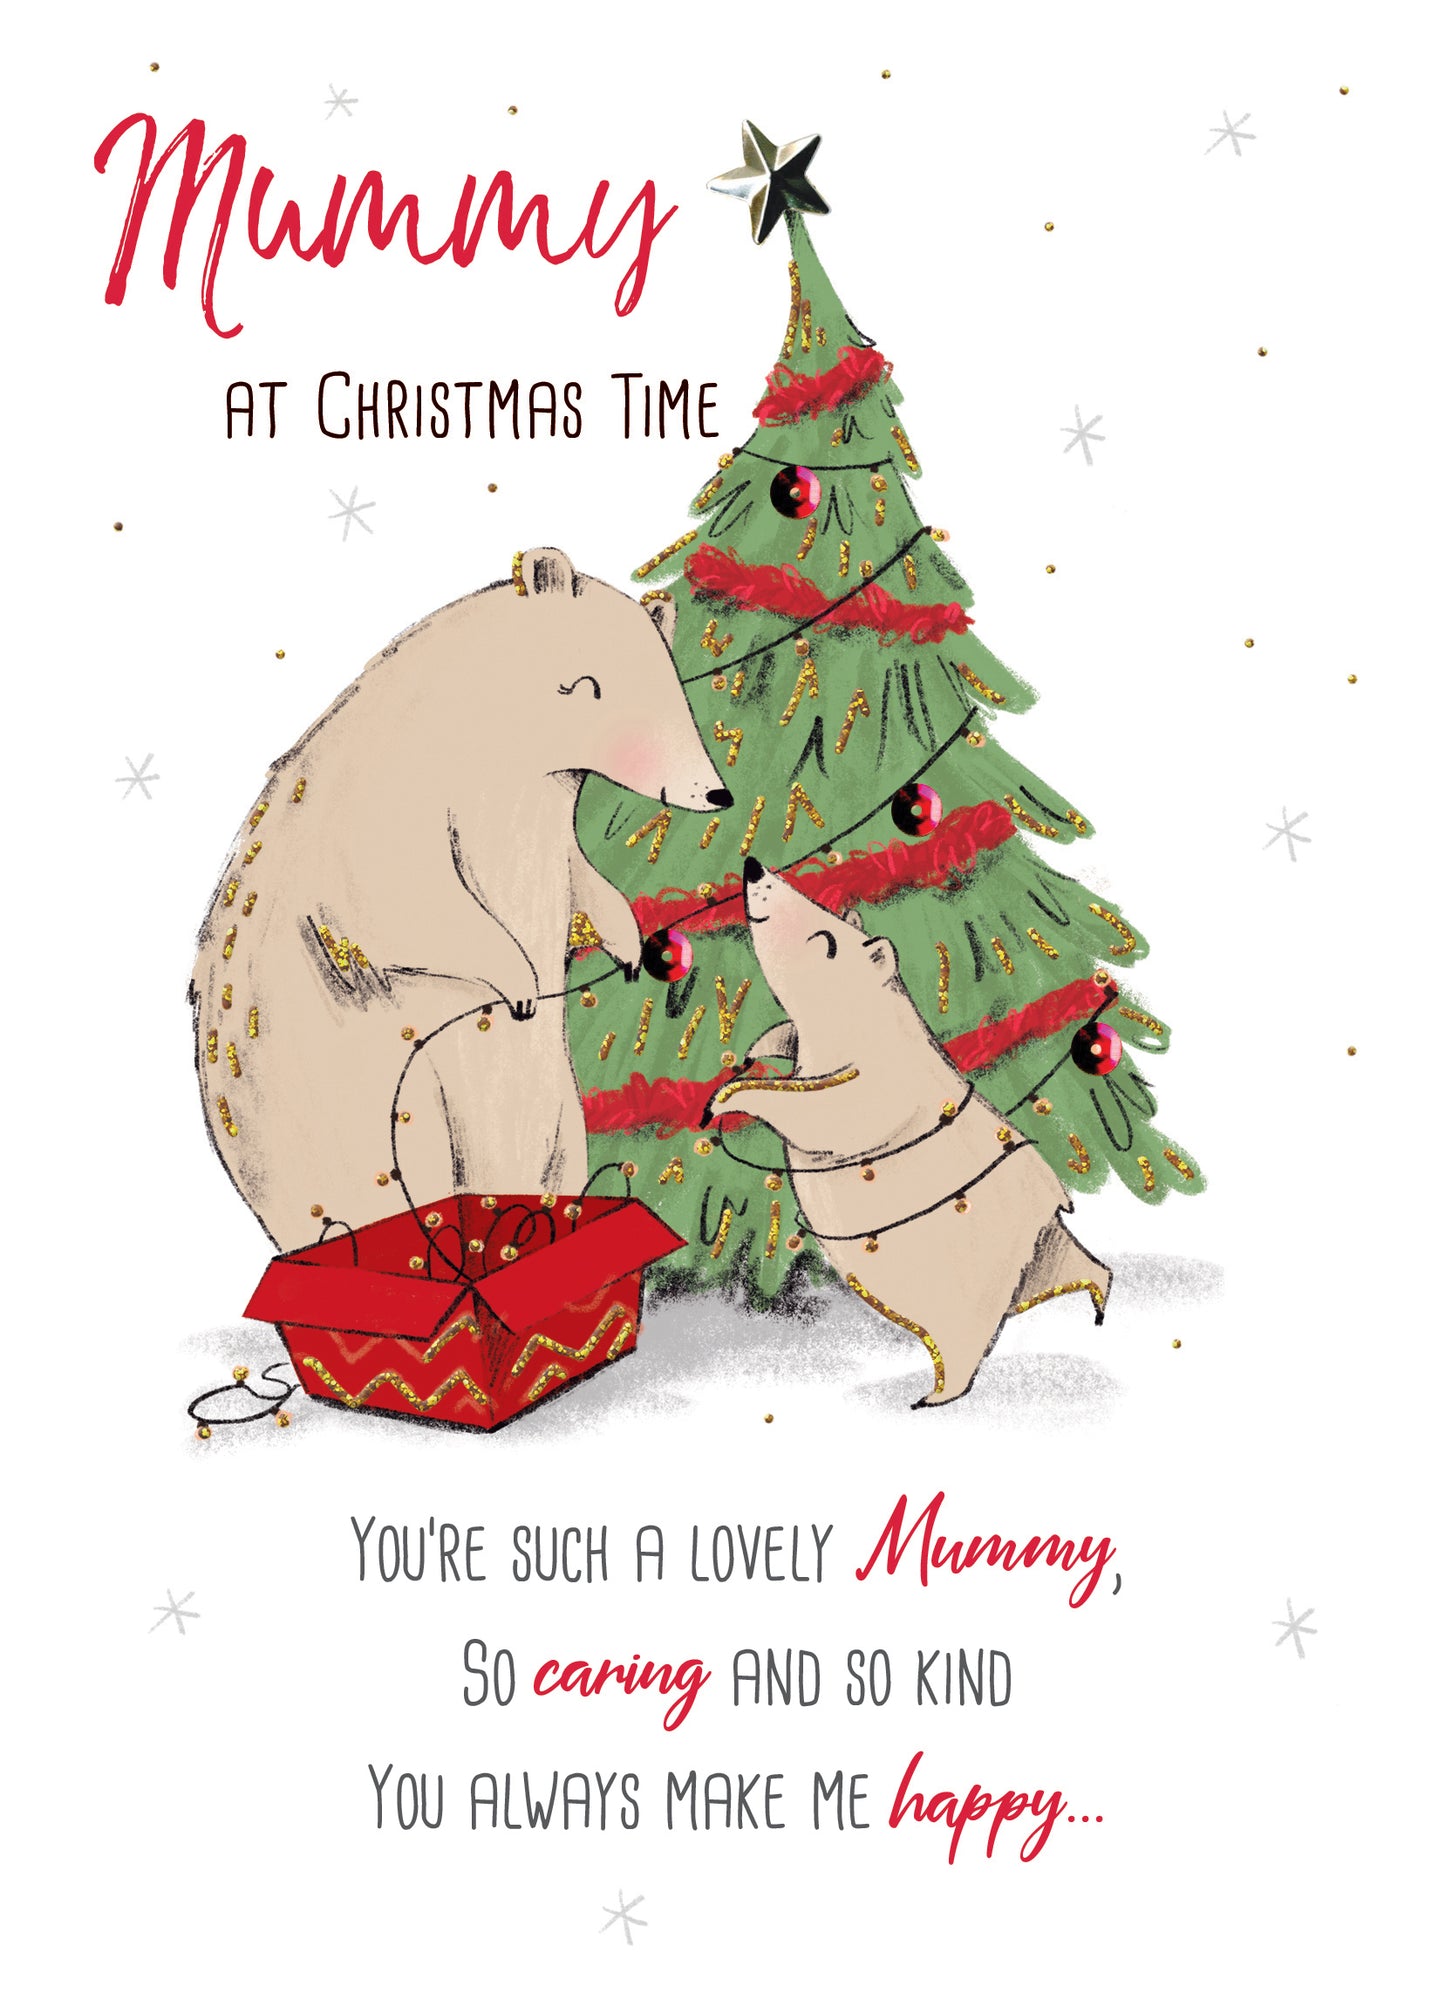 A Lovely Mummy Embellished Christmas Card